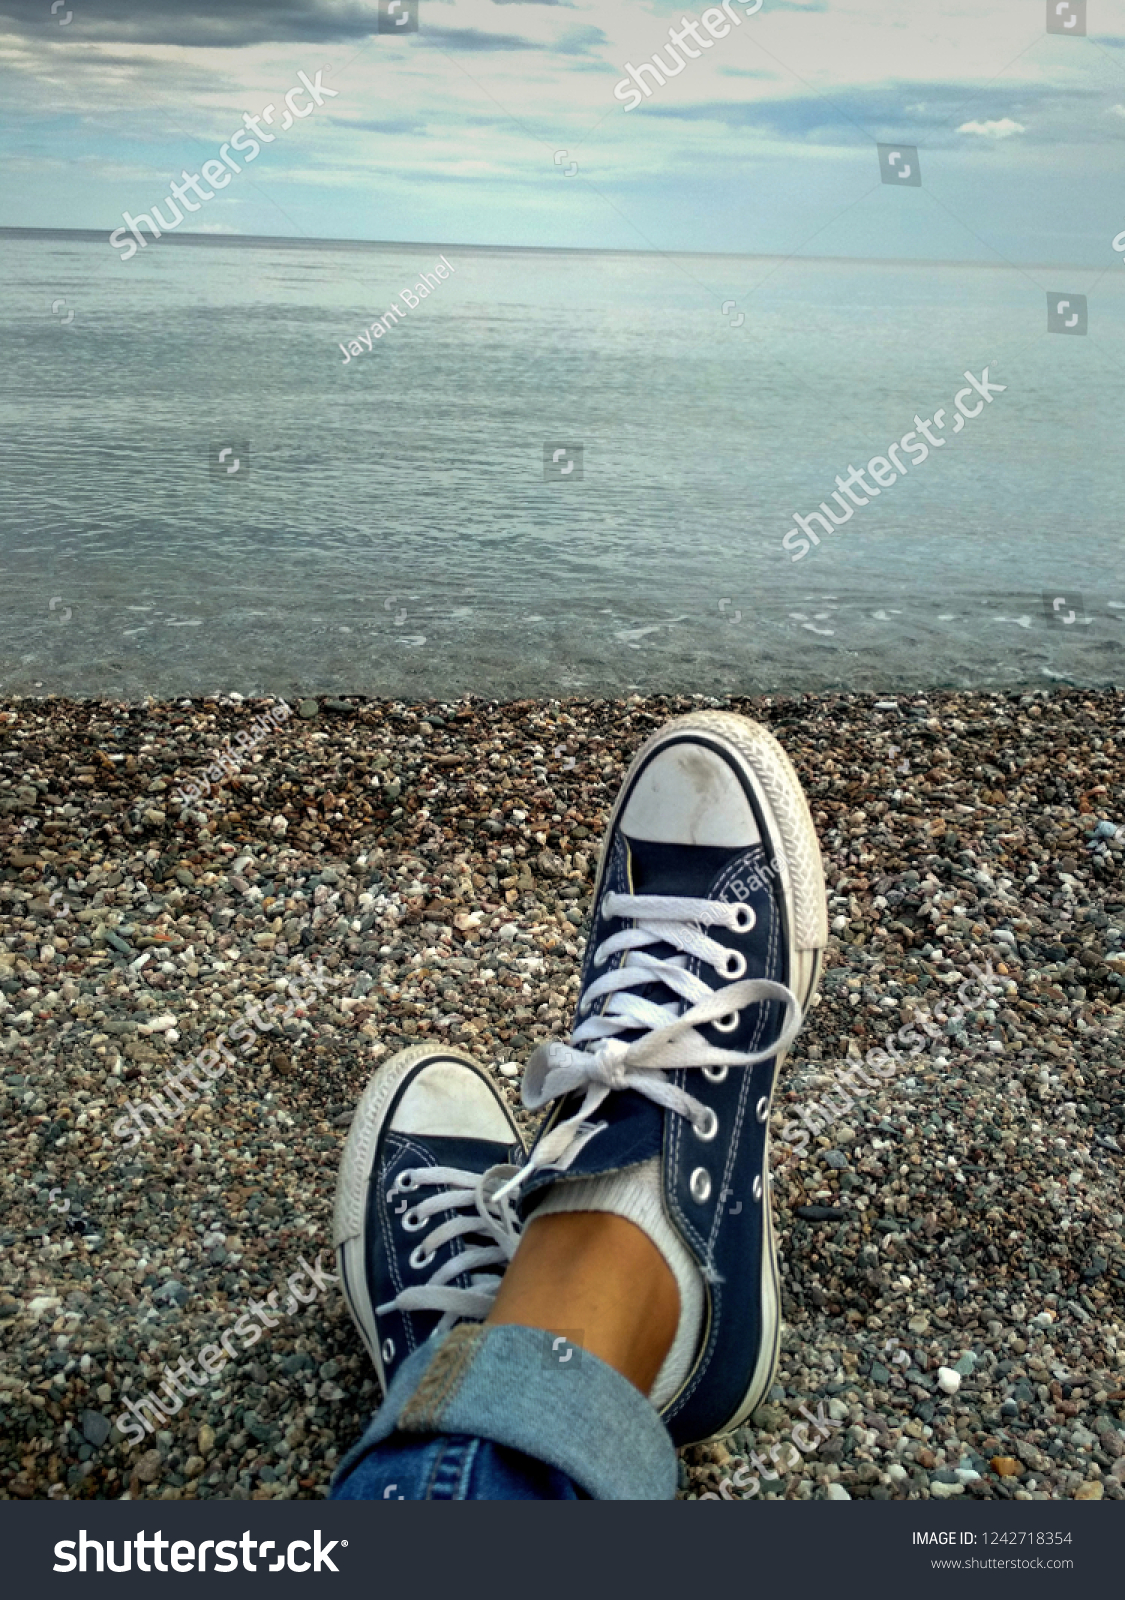 girl wearing converse shoes